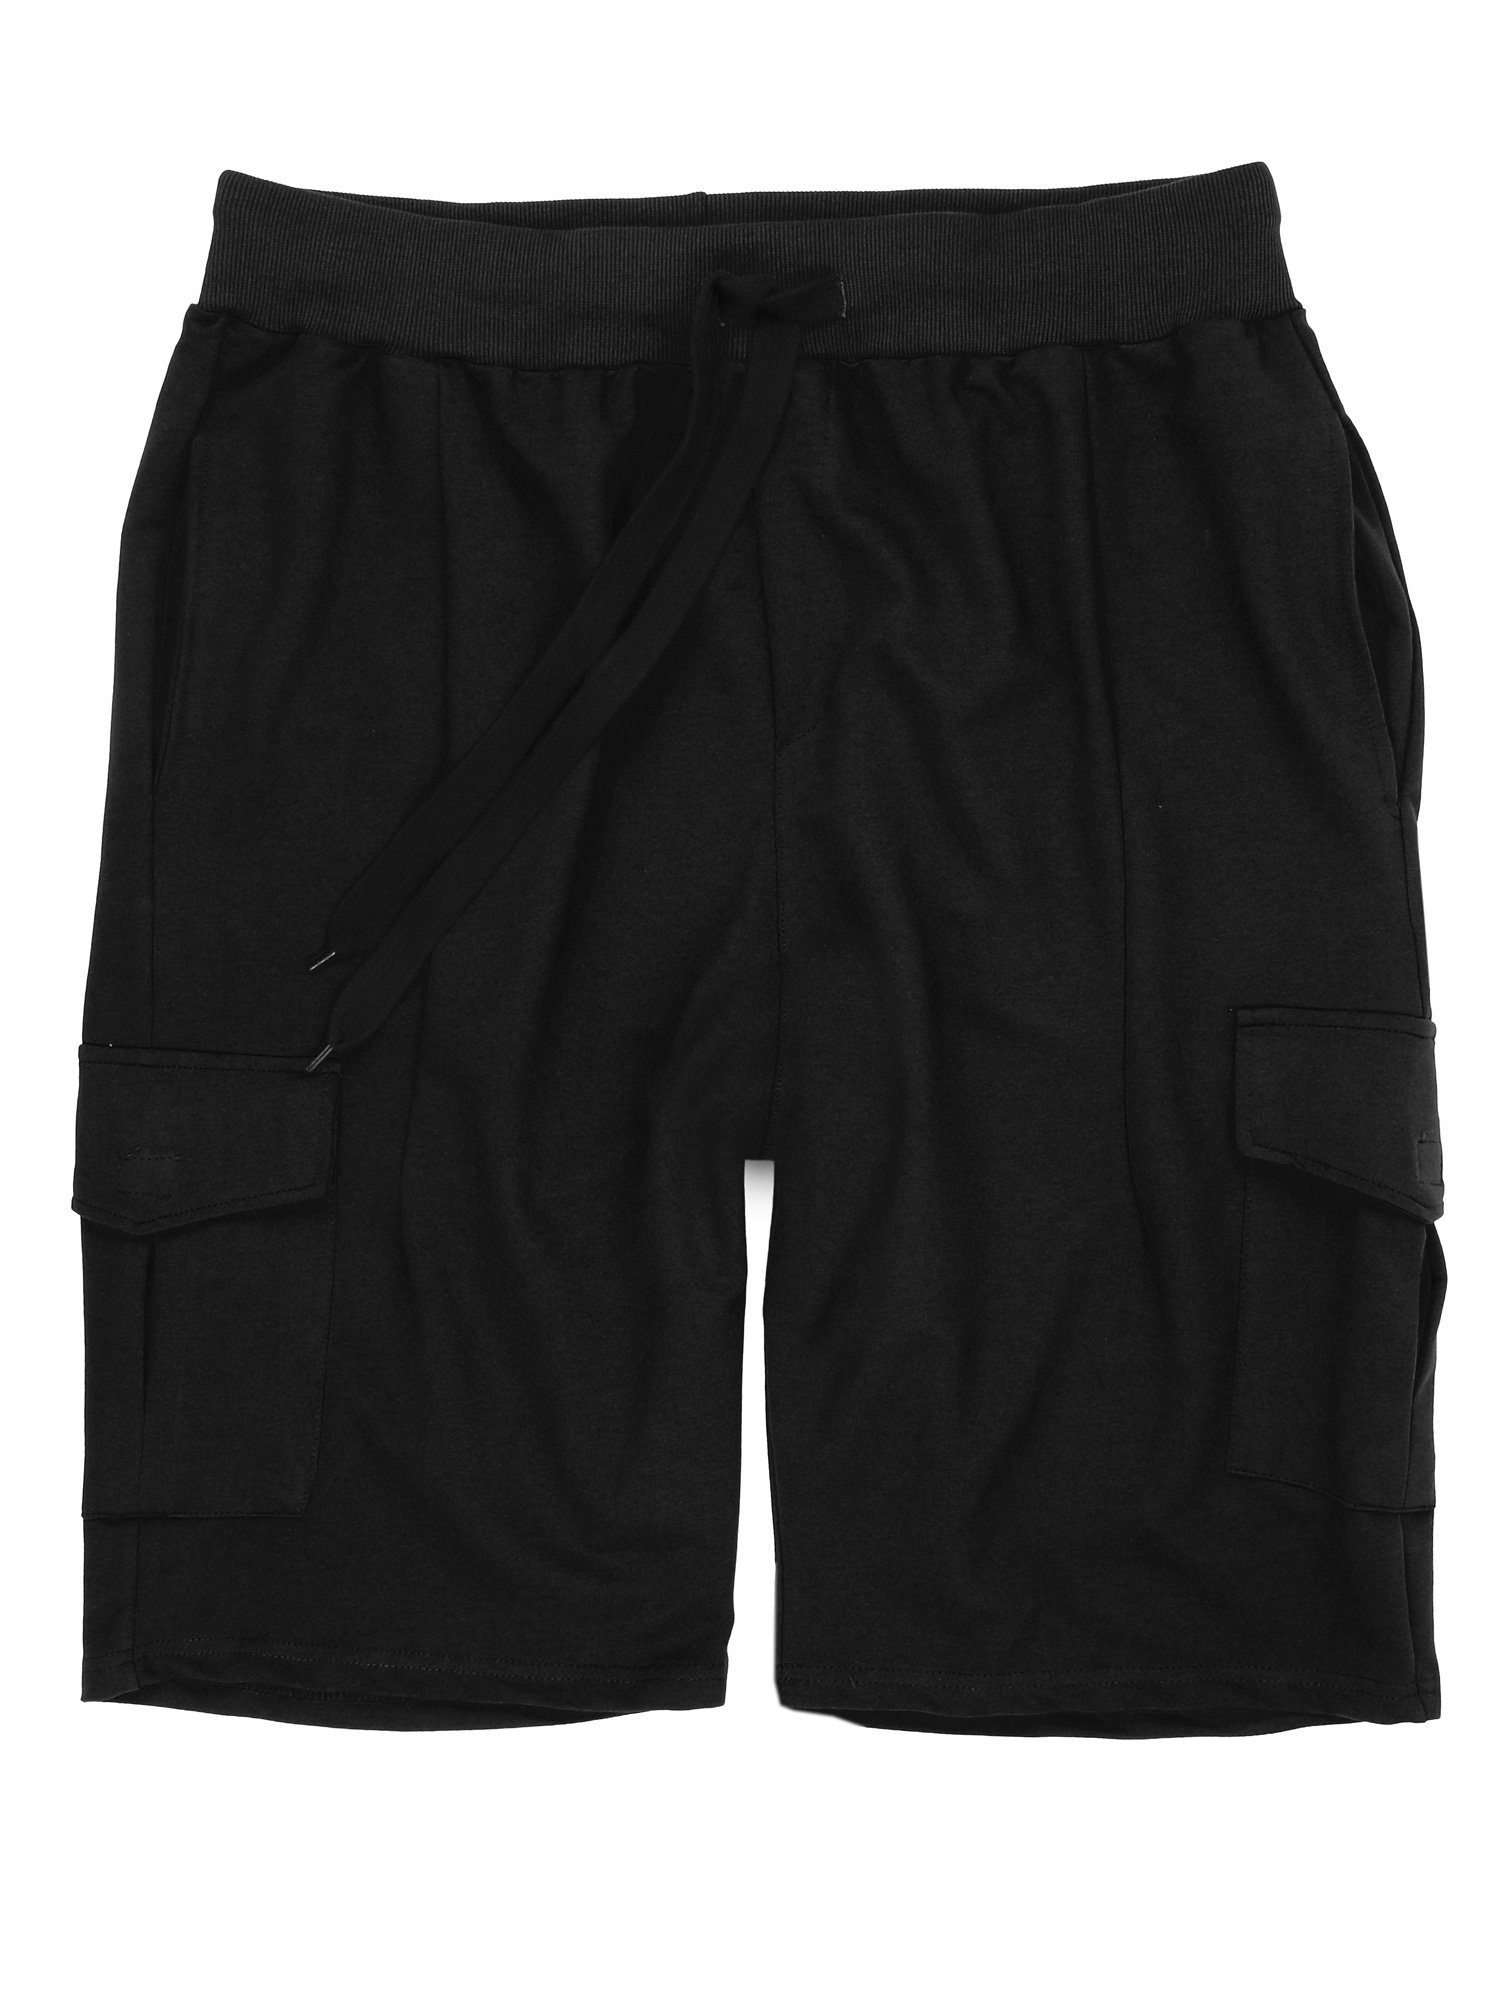 Übergrößen Jogger Cargoshorts Herren Hose Lavecchia Shorts LV-2011 Sweat schwarz kurze